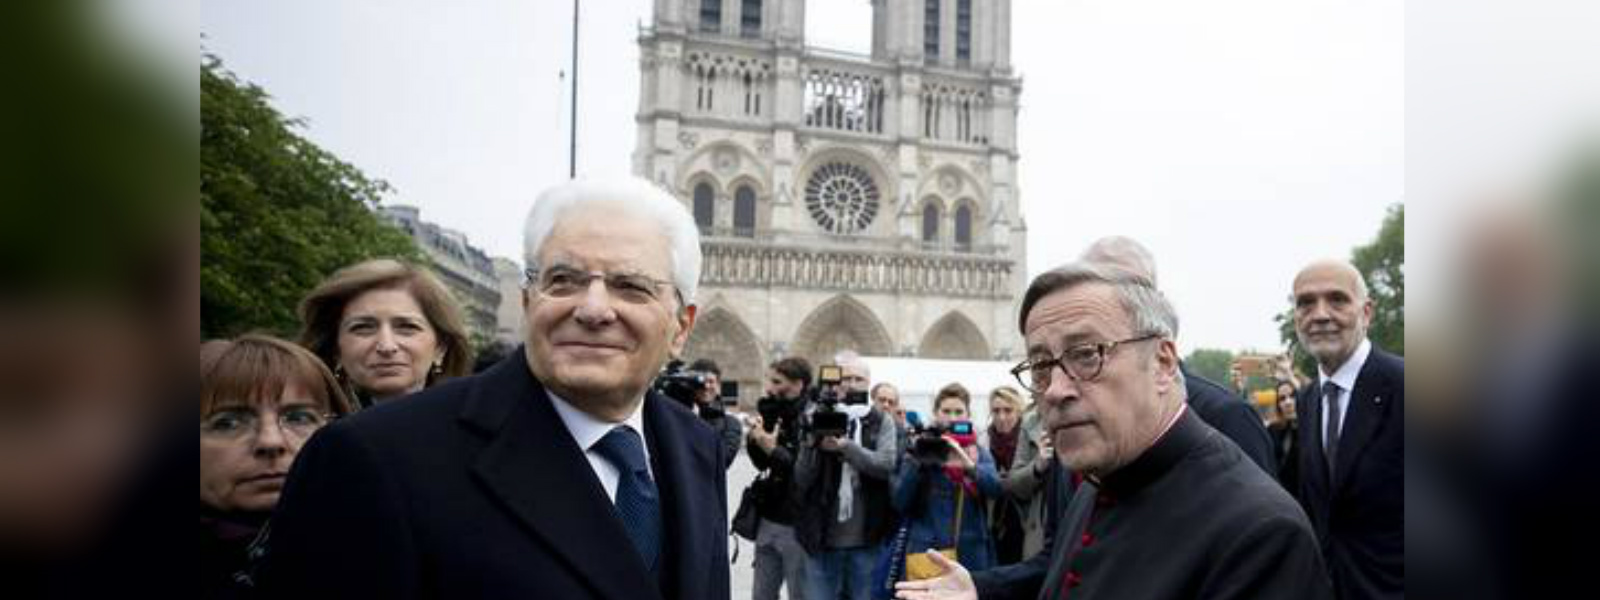 Italian President Mattarella visits Notre-Dame